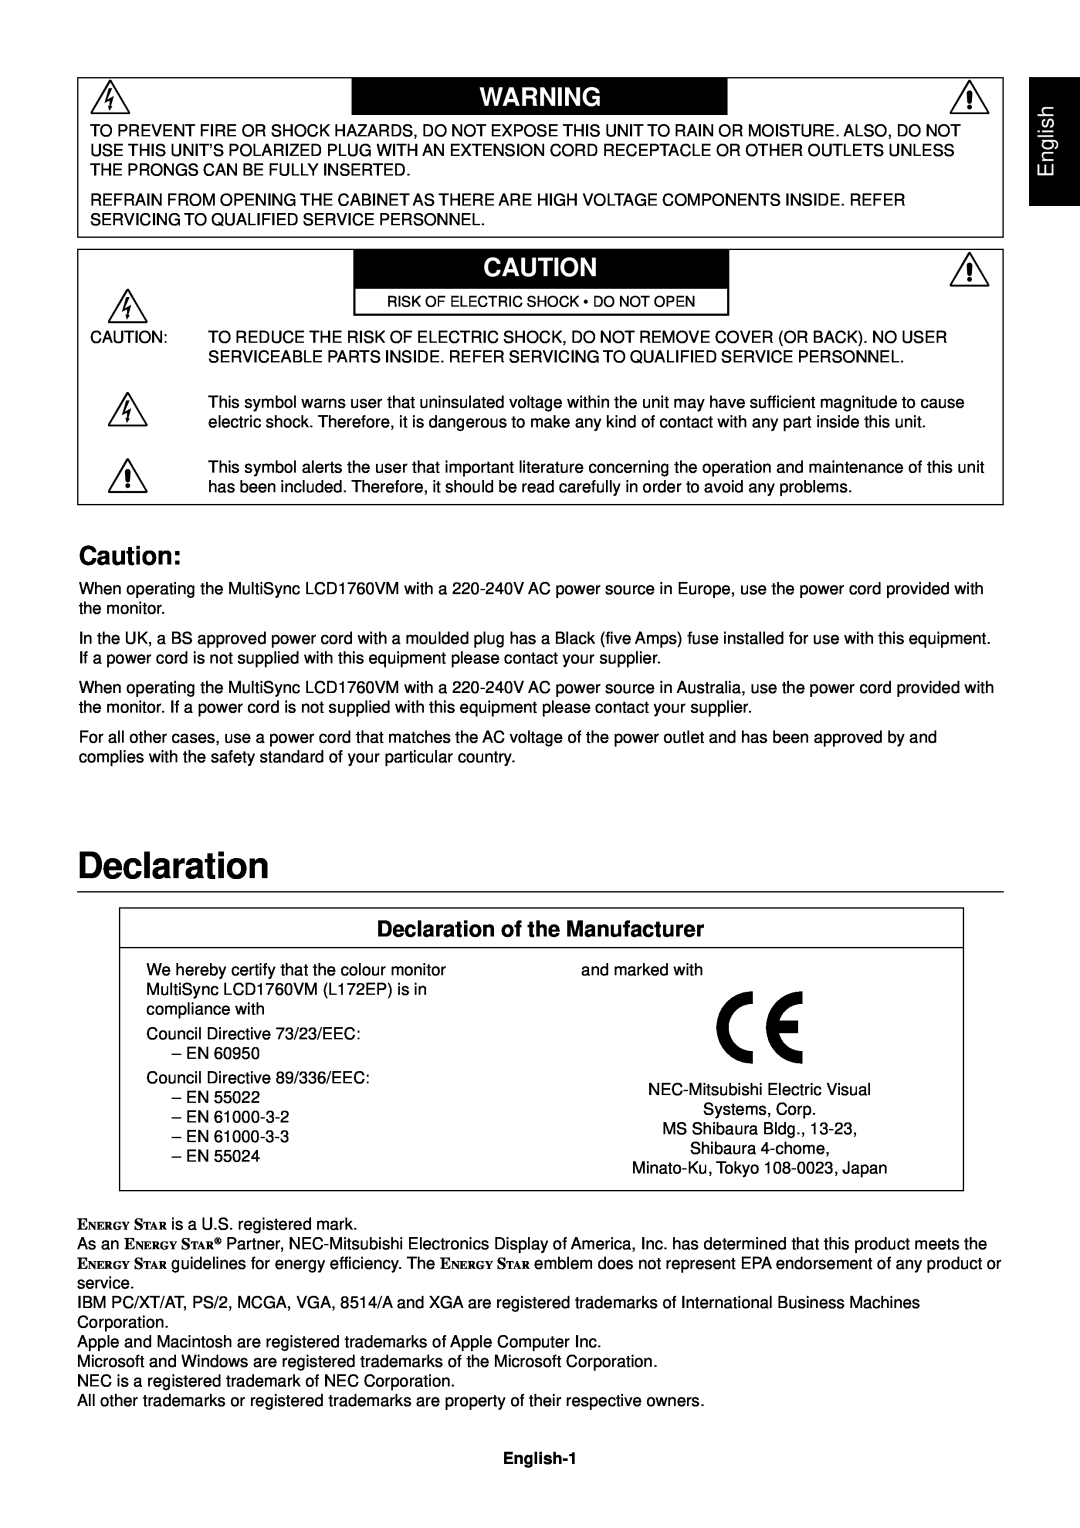 Mitsubishi Electronics LCD1760VM user manual English, Declaration of the Manufacturer 